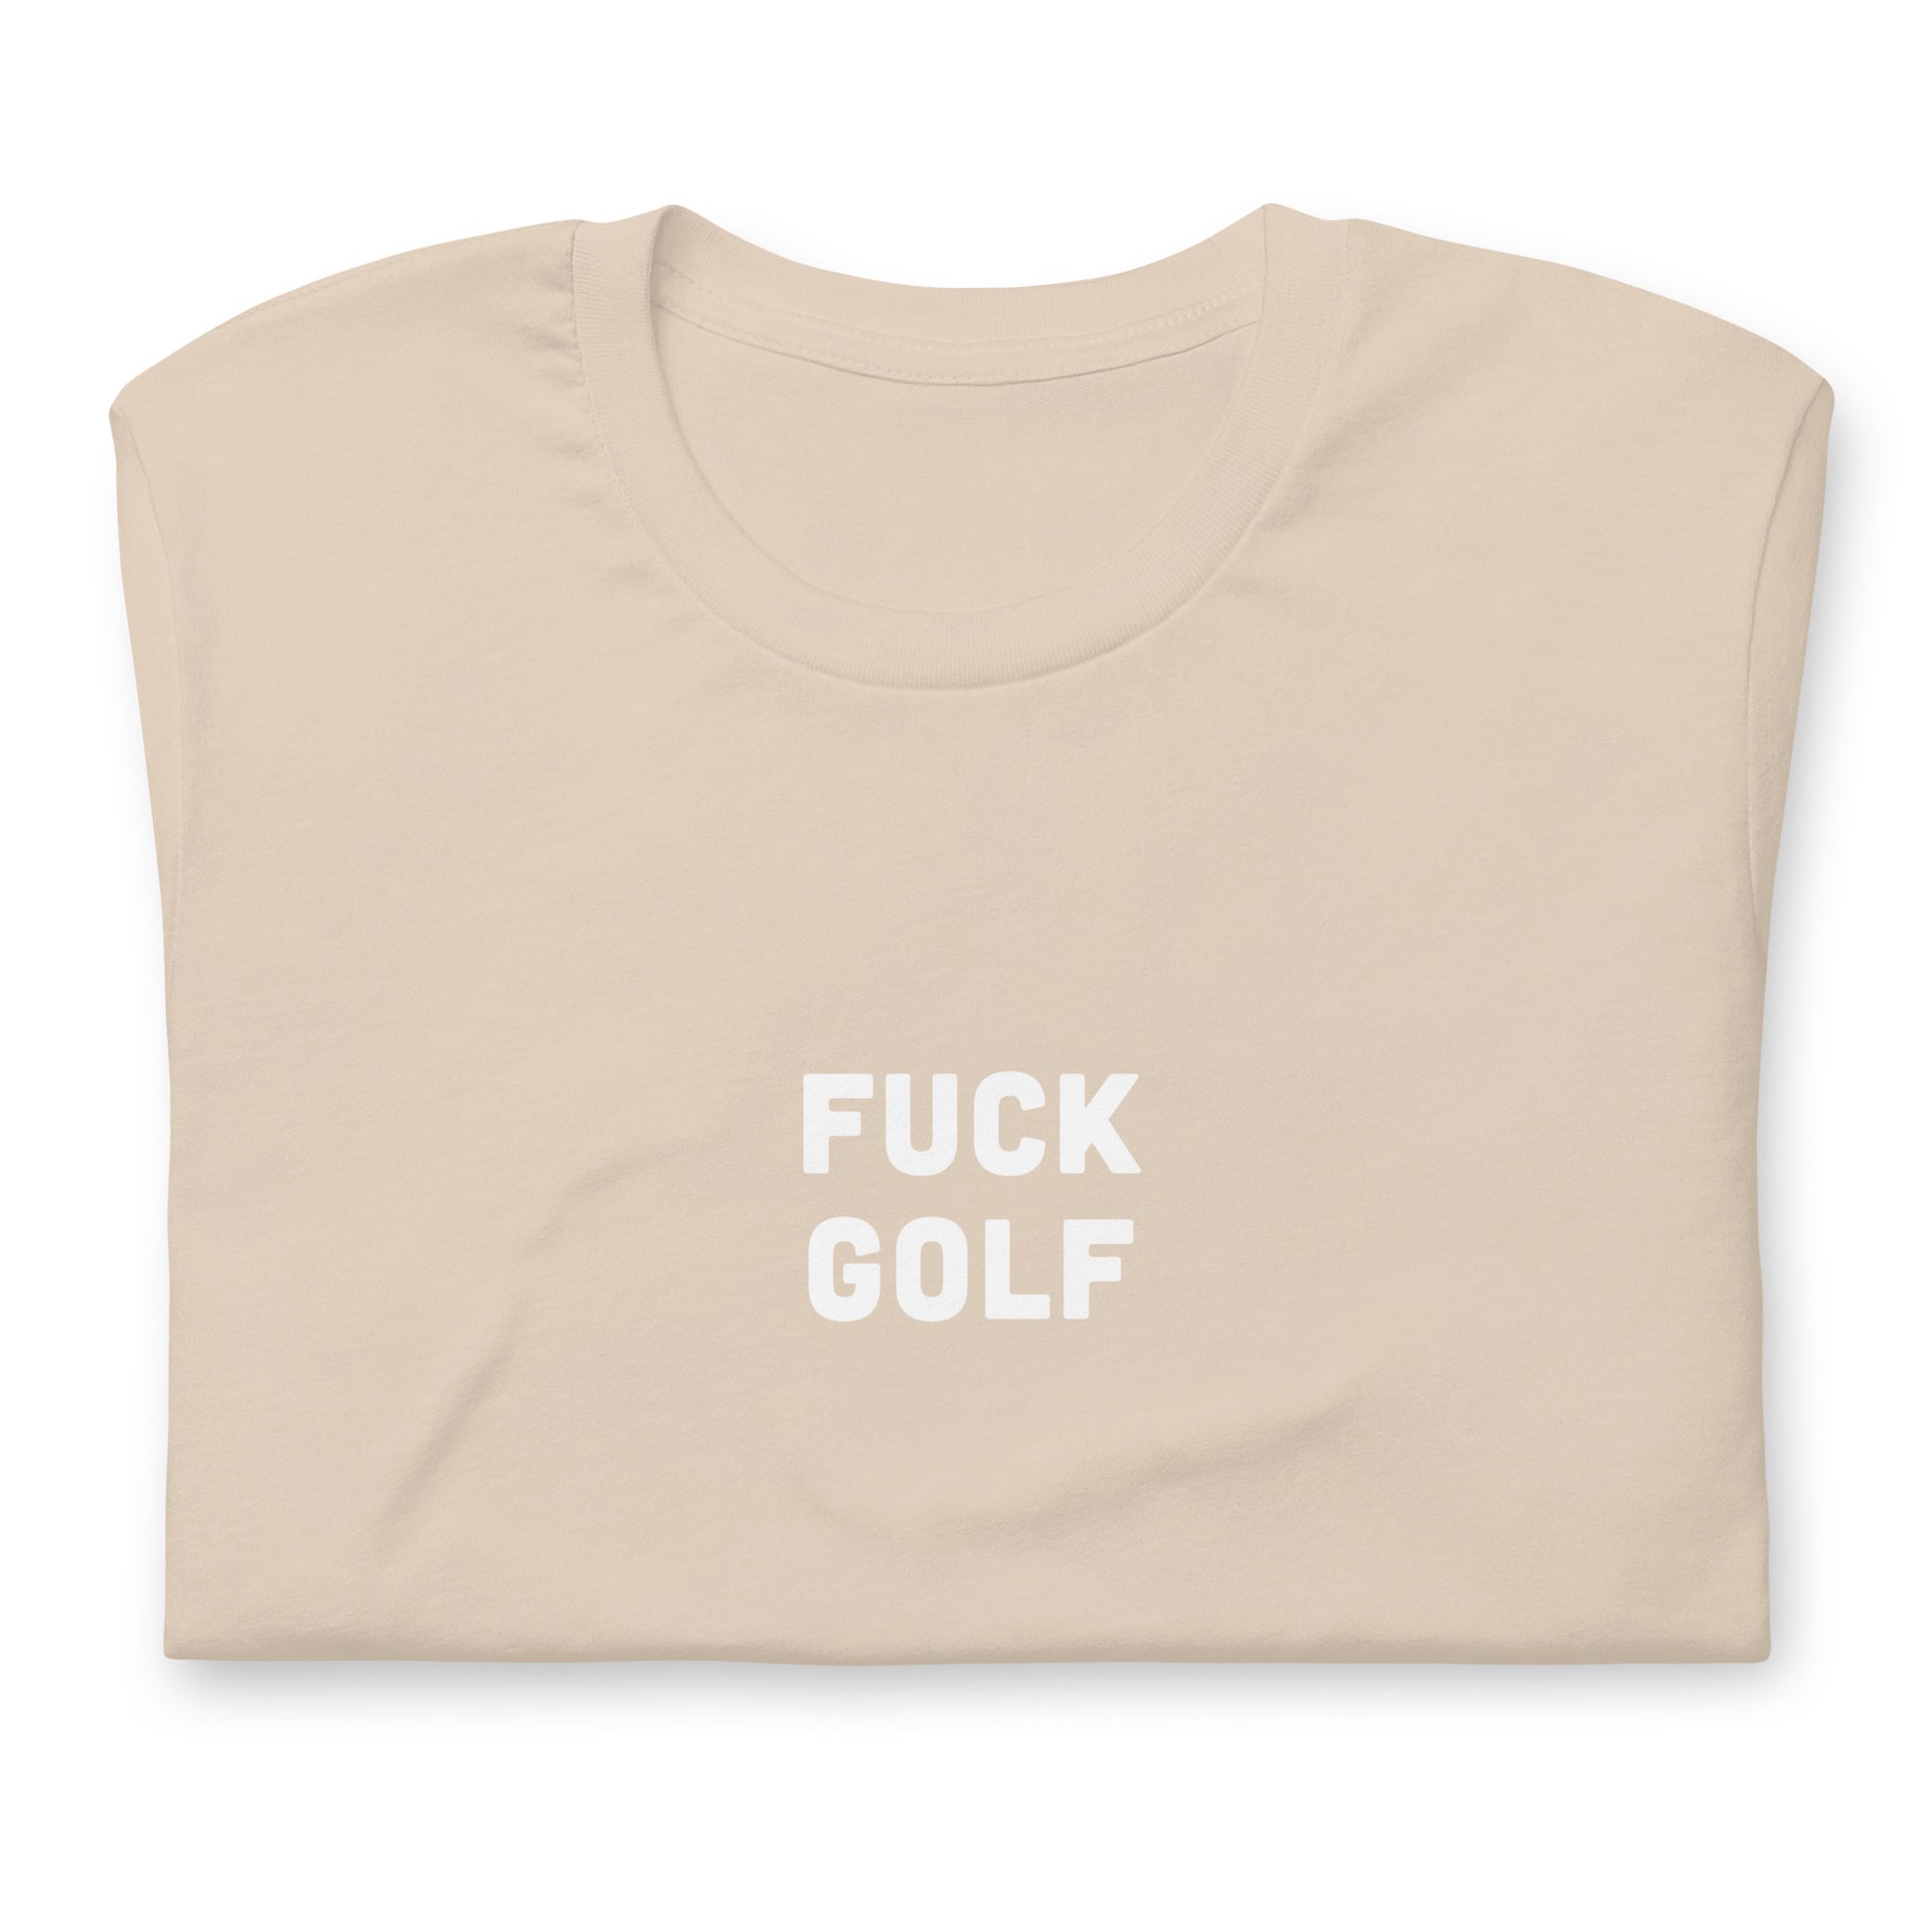 Fuck Golf T-Shirt Size L Color Asphalt